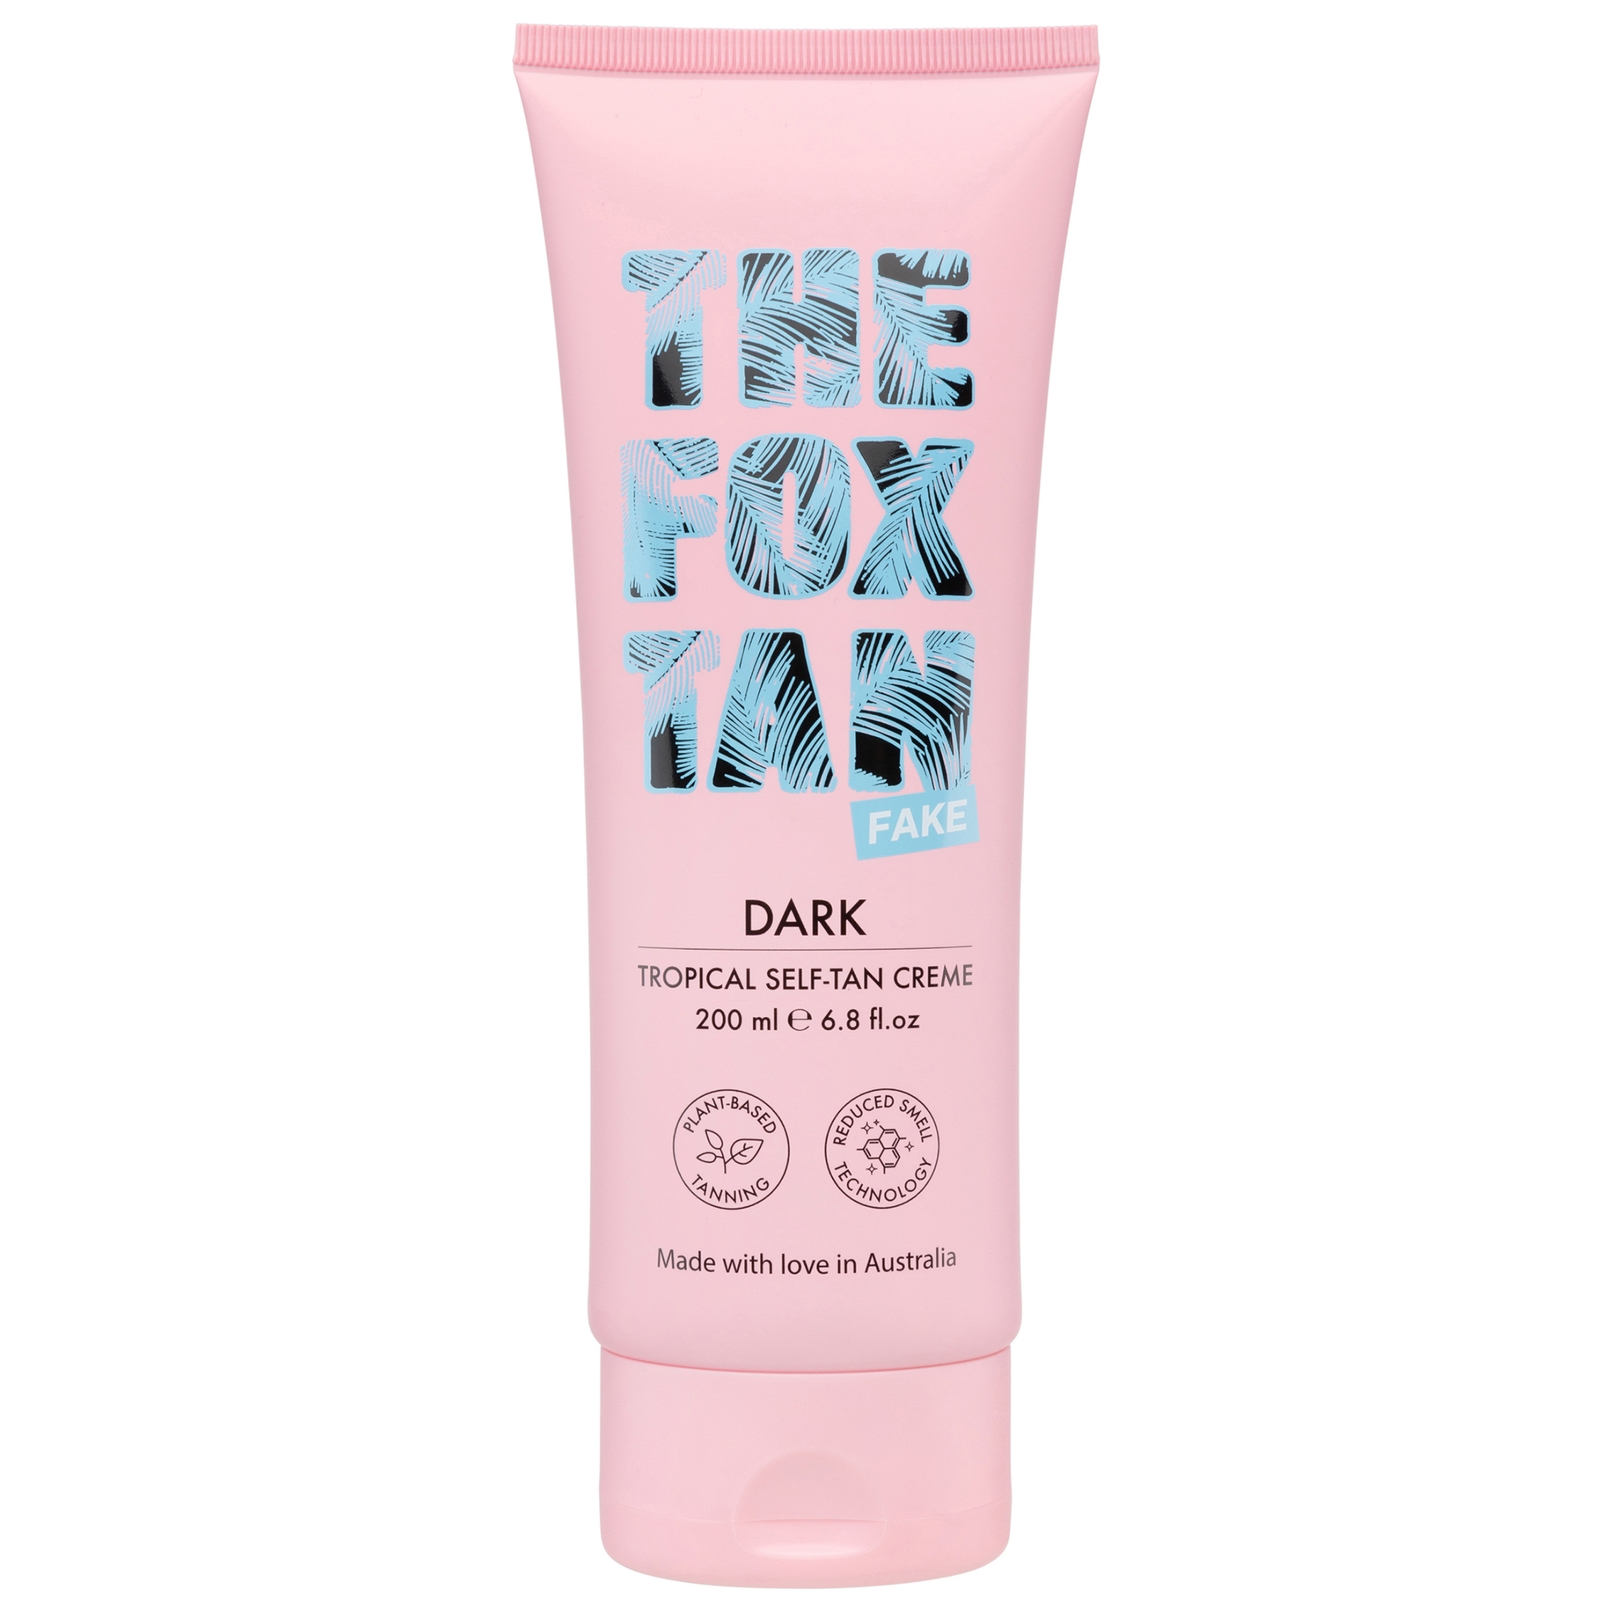 The Fox Tan Dark Tropical Self-Tan Creme 200ml